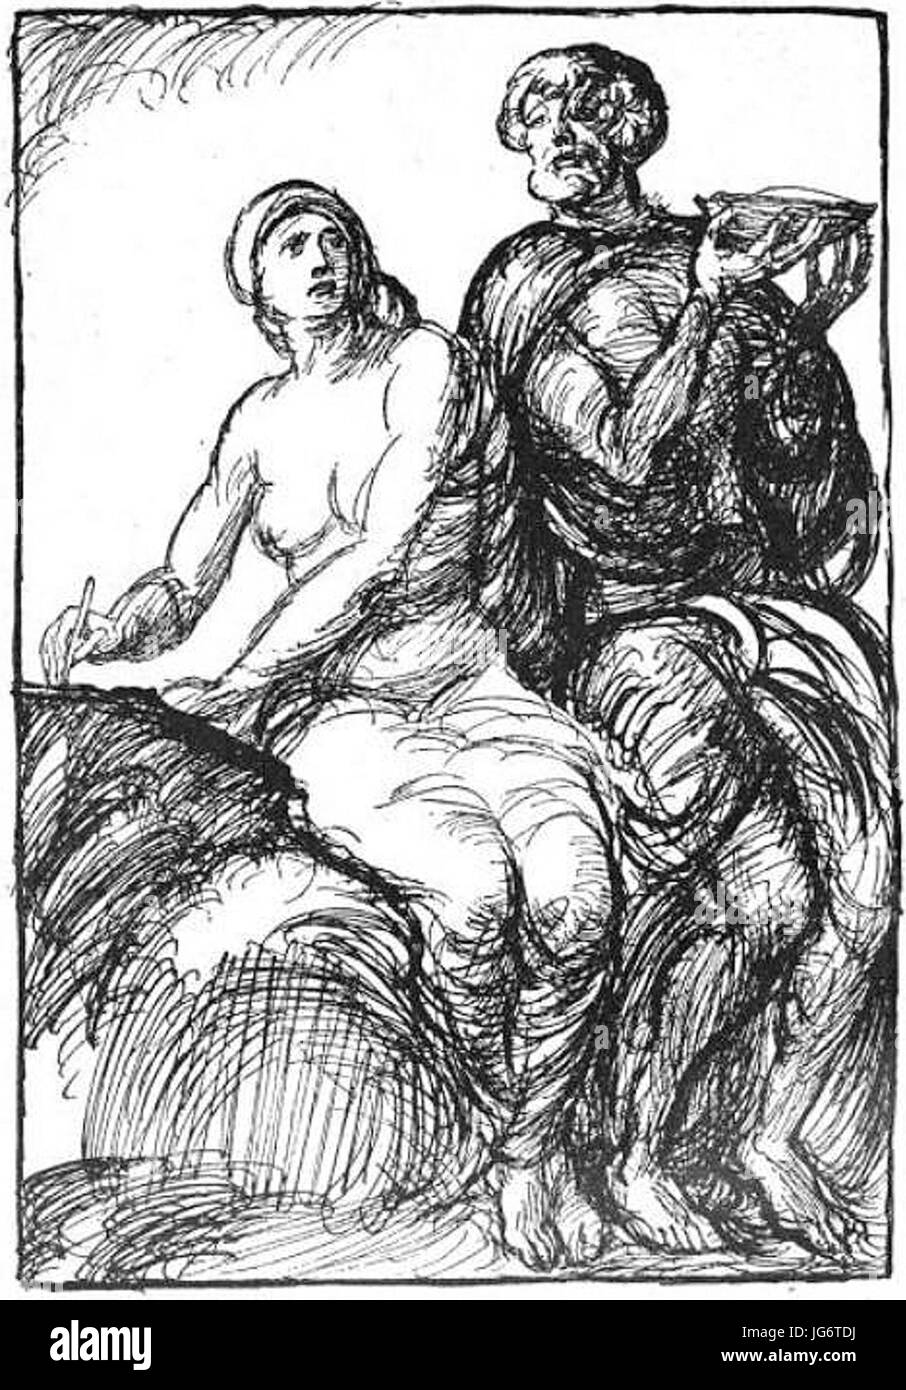 Sága et Odin par Robert Engels Banque D'Images